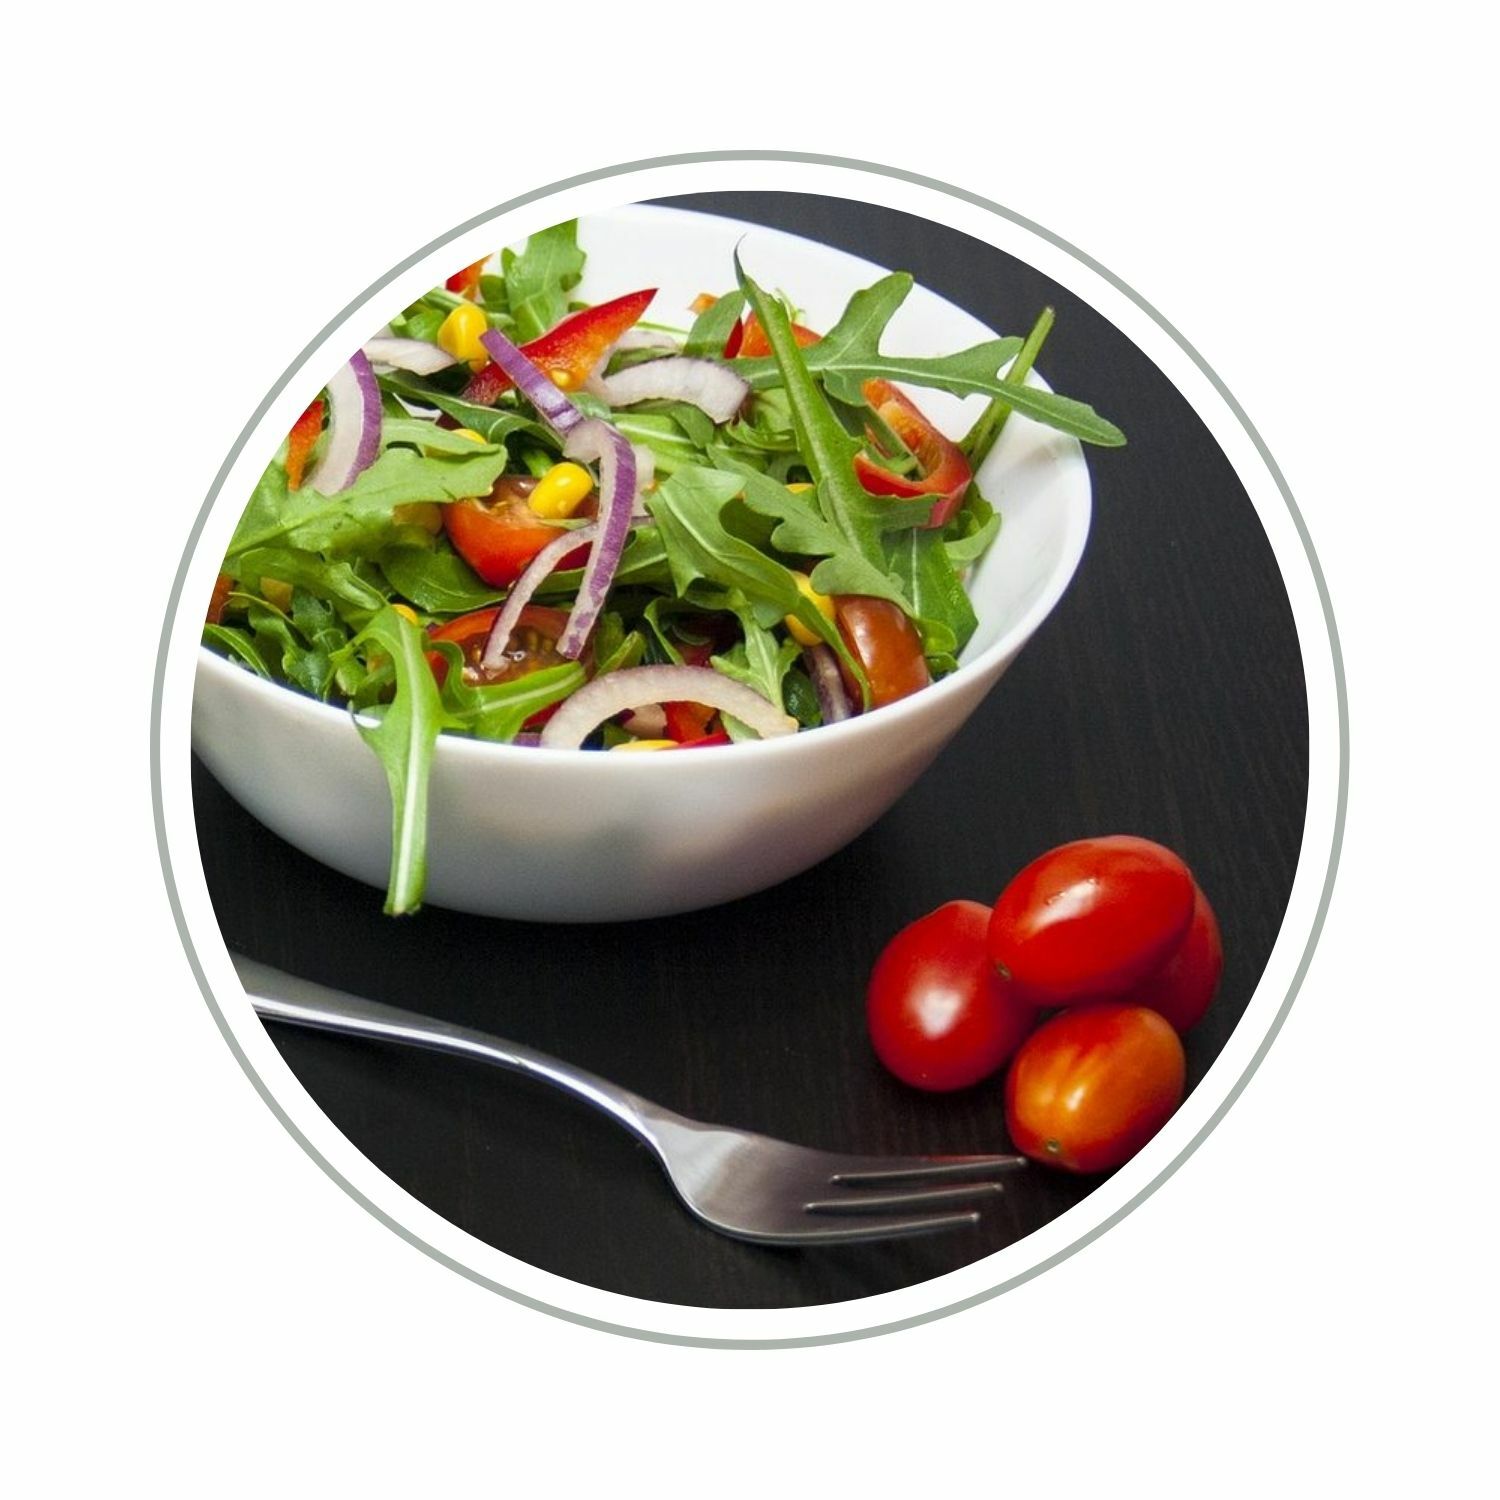 Салат овощи калорийность на 100. Овощной салат калорийность. Салат из овощей калорийность. Овощи вок калорийность. Салат из свежих овощей калорийность.